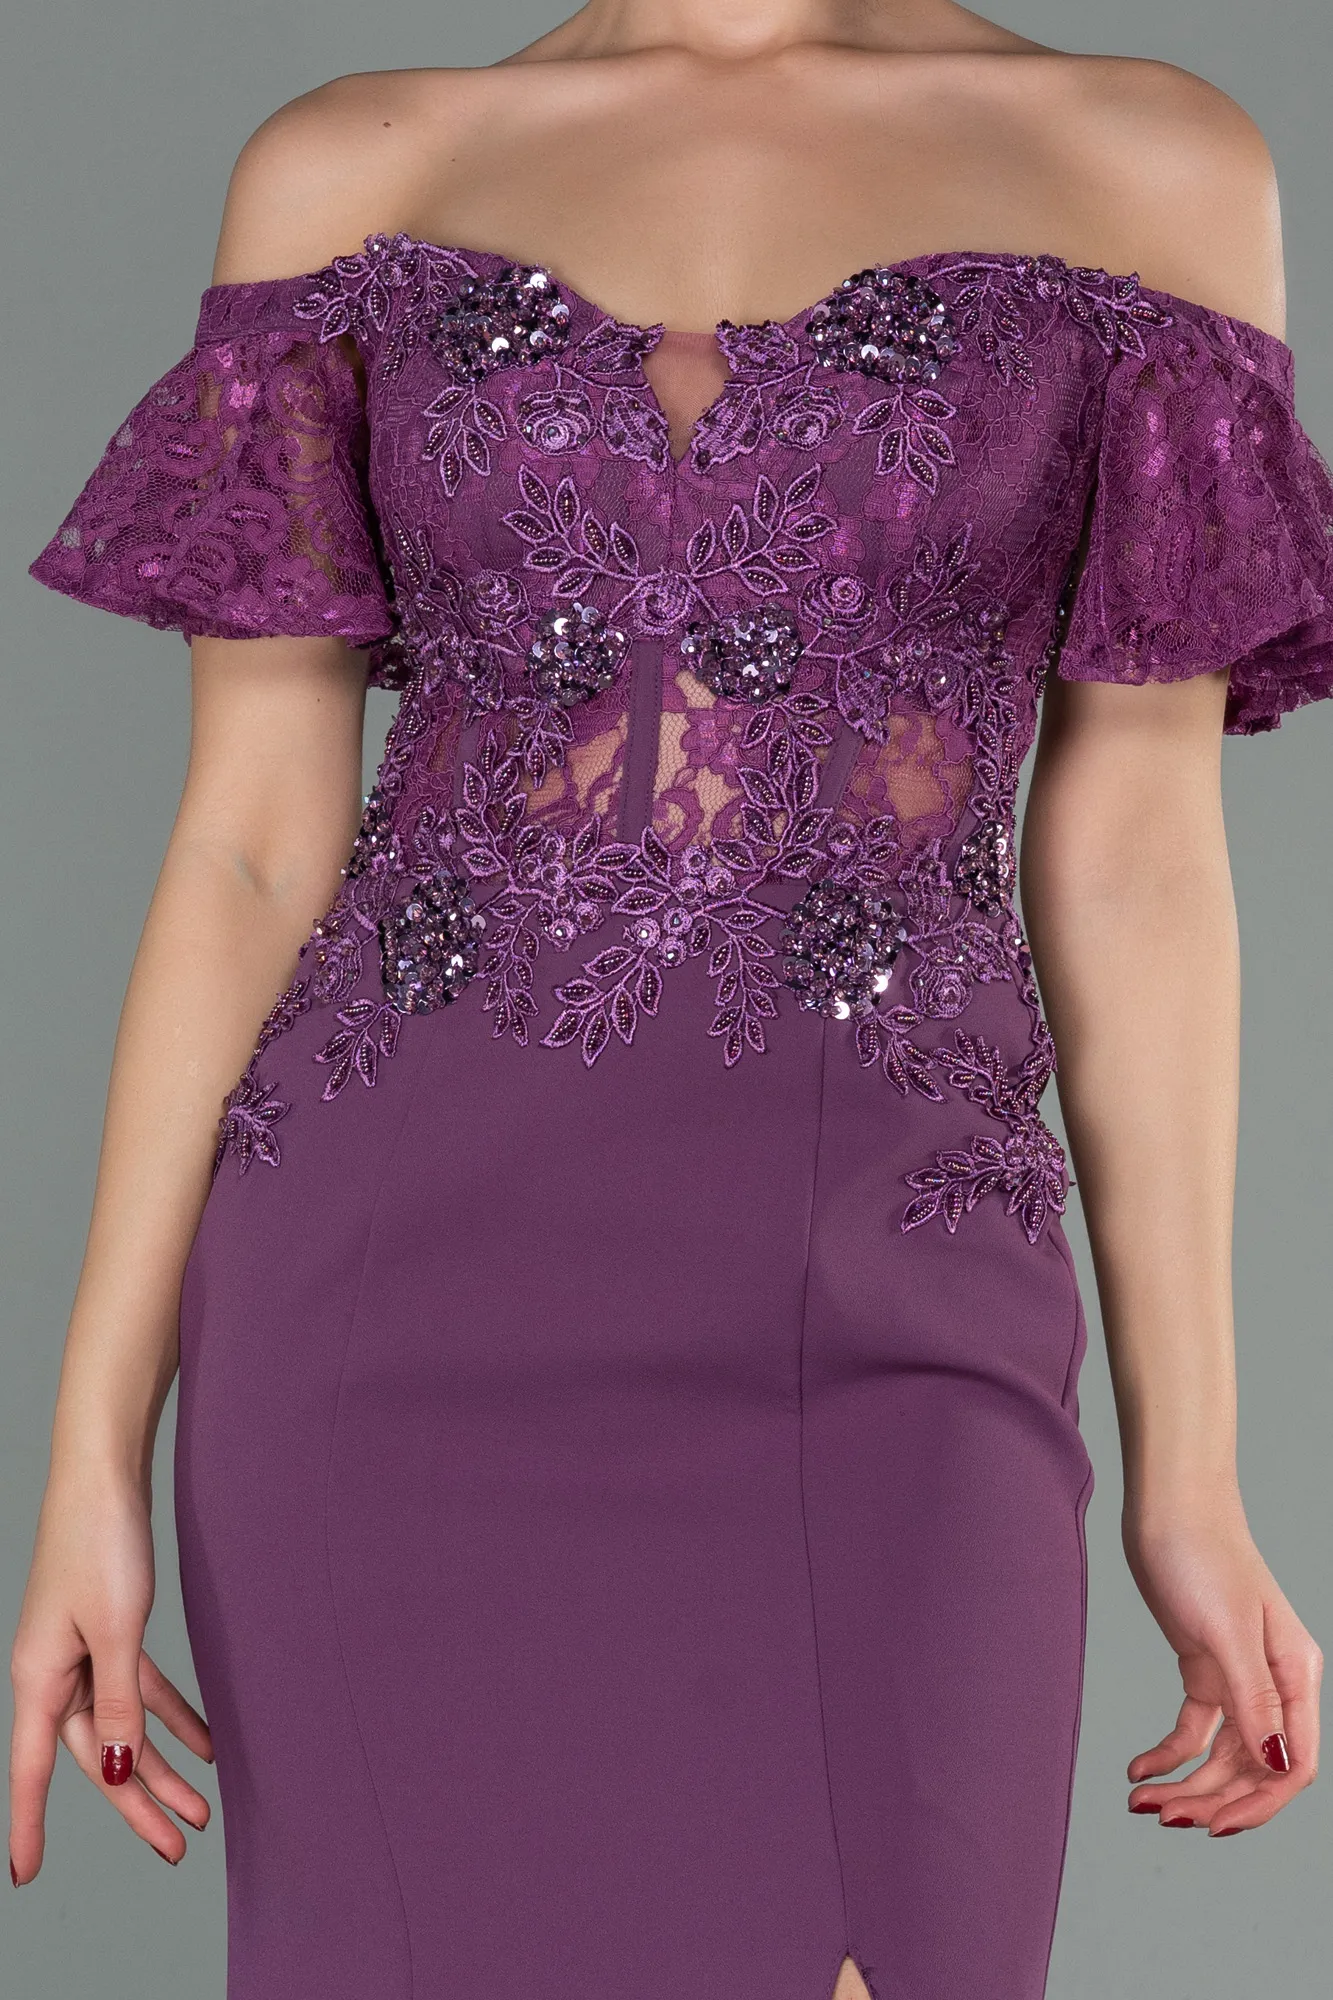 Lavender-Long Evening Dress ABU3077